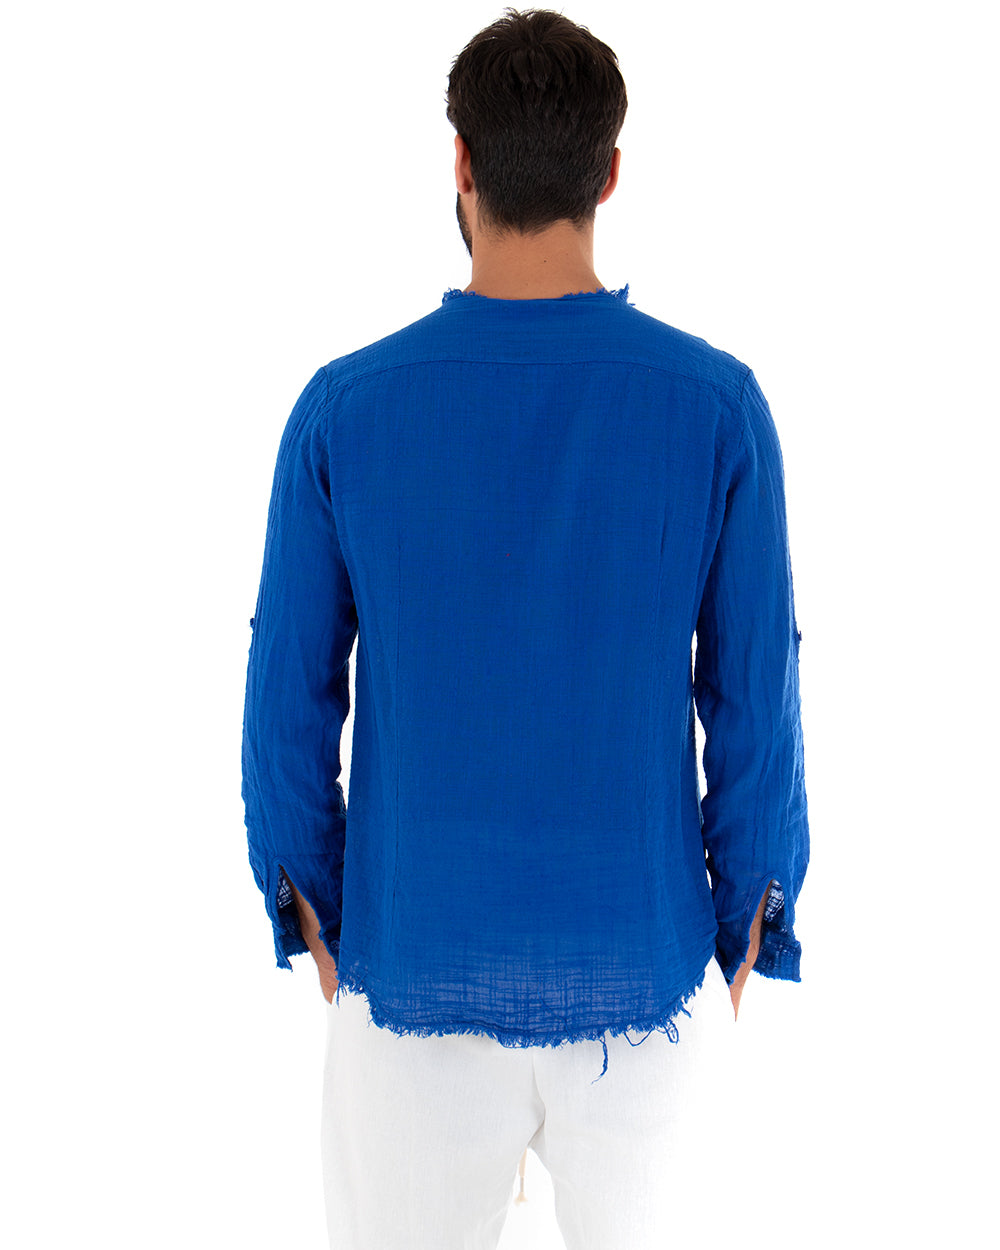 Men's Shirt Solid Color Royal Blue Long Sleeve Casual Cotton Linen GIOSAL-C2736A